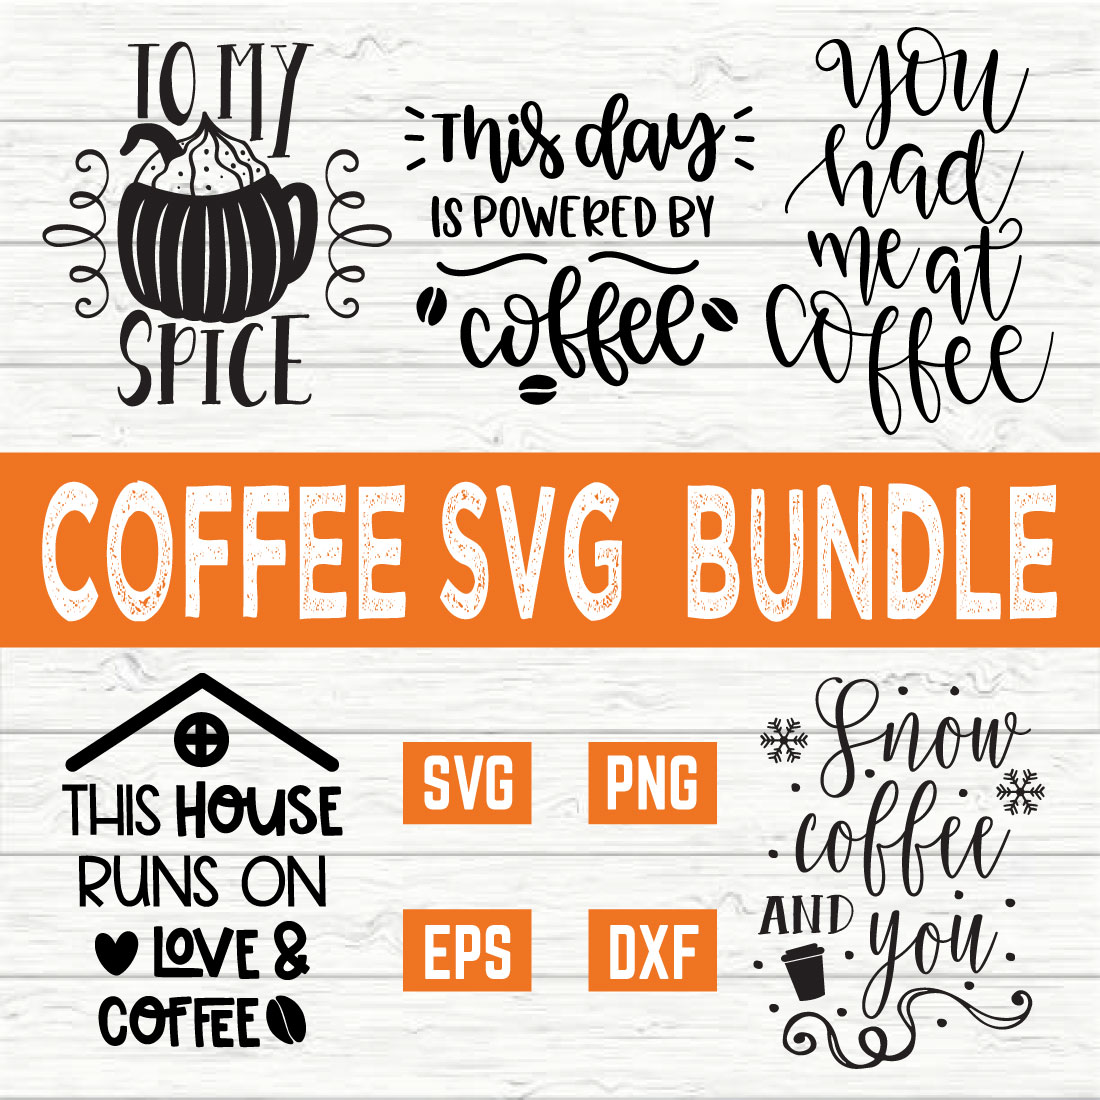 Coffee Svg Bundle vol 8 preview image.